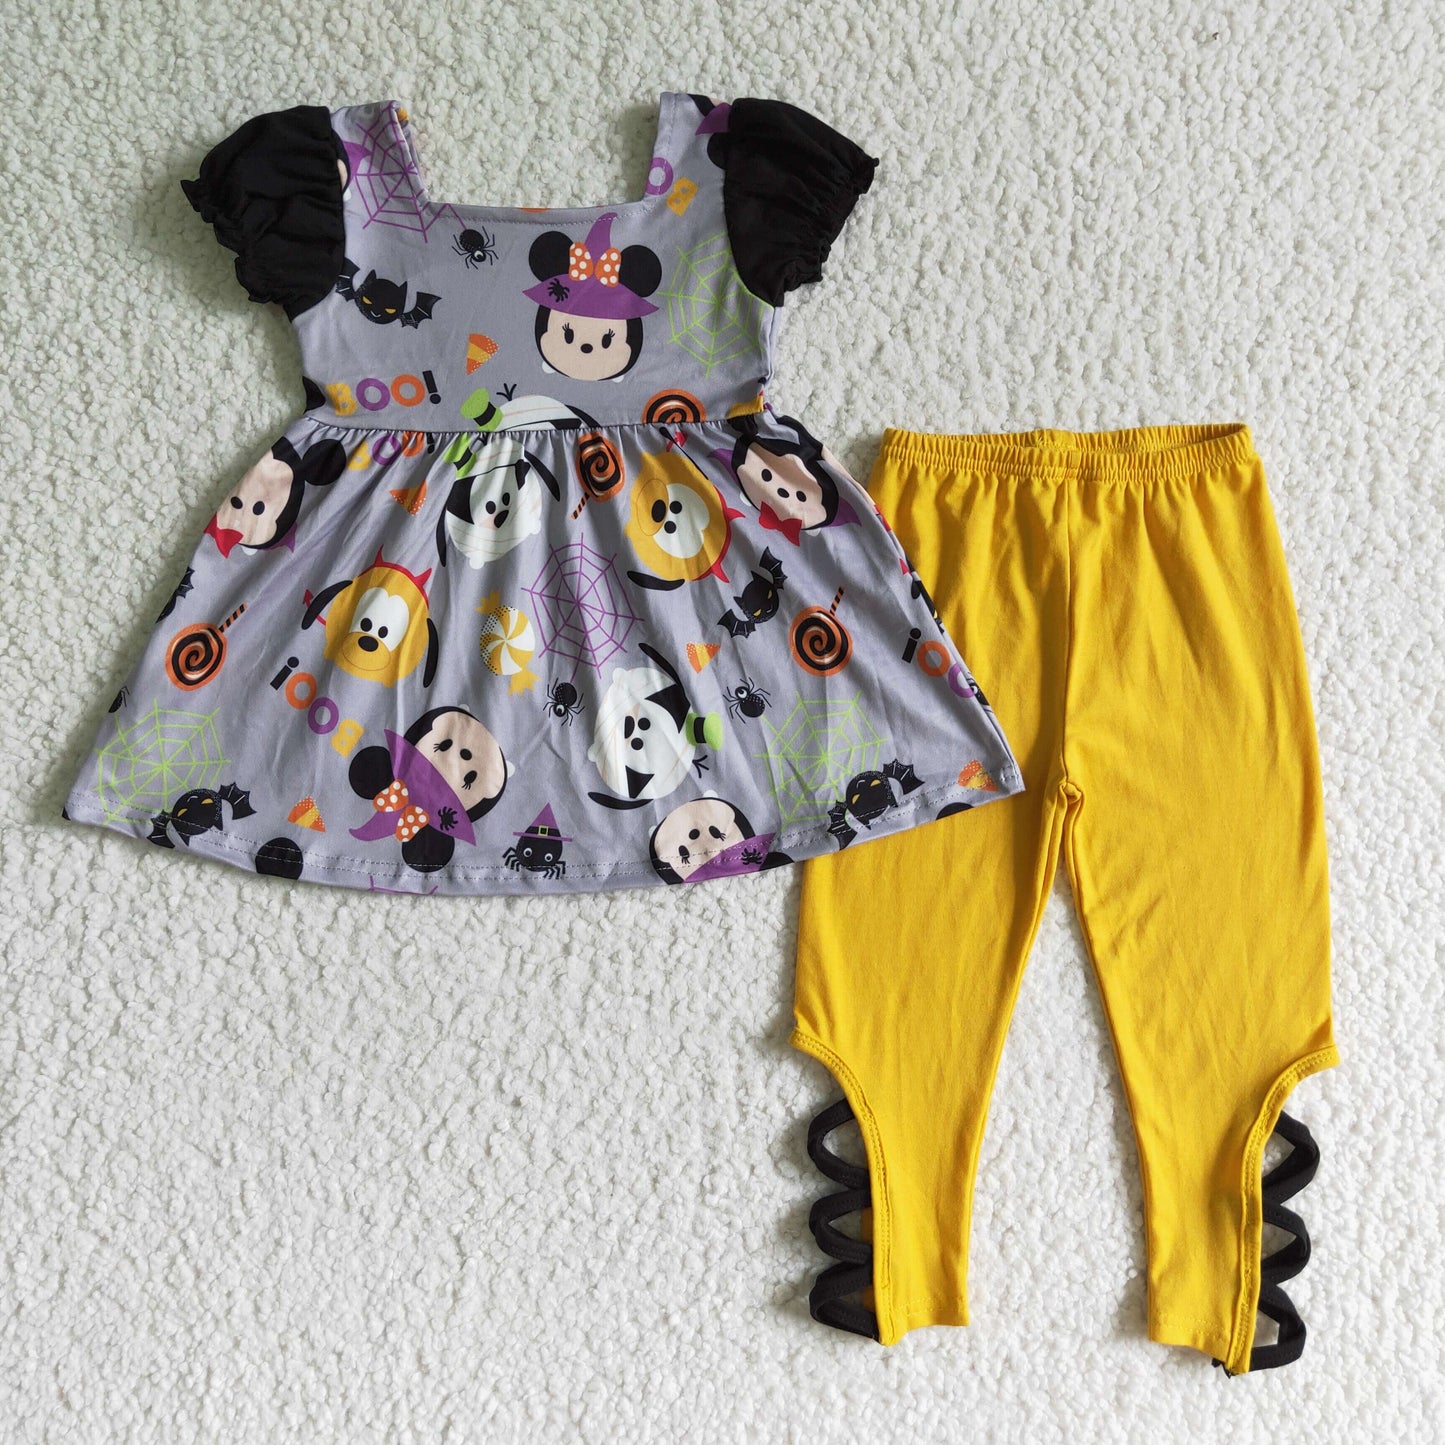 Boo mouse tunic criss cross leggings girls Halloween clothes